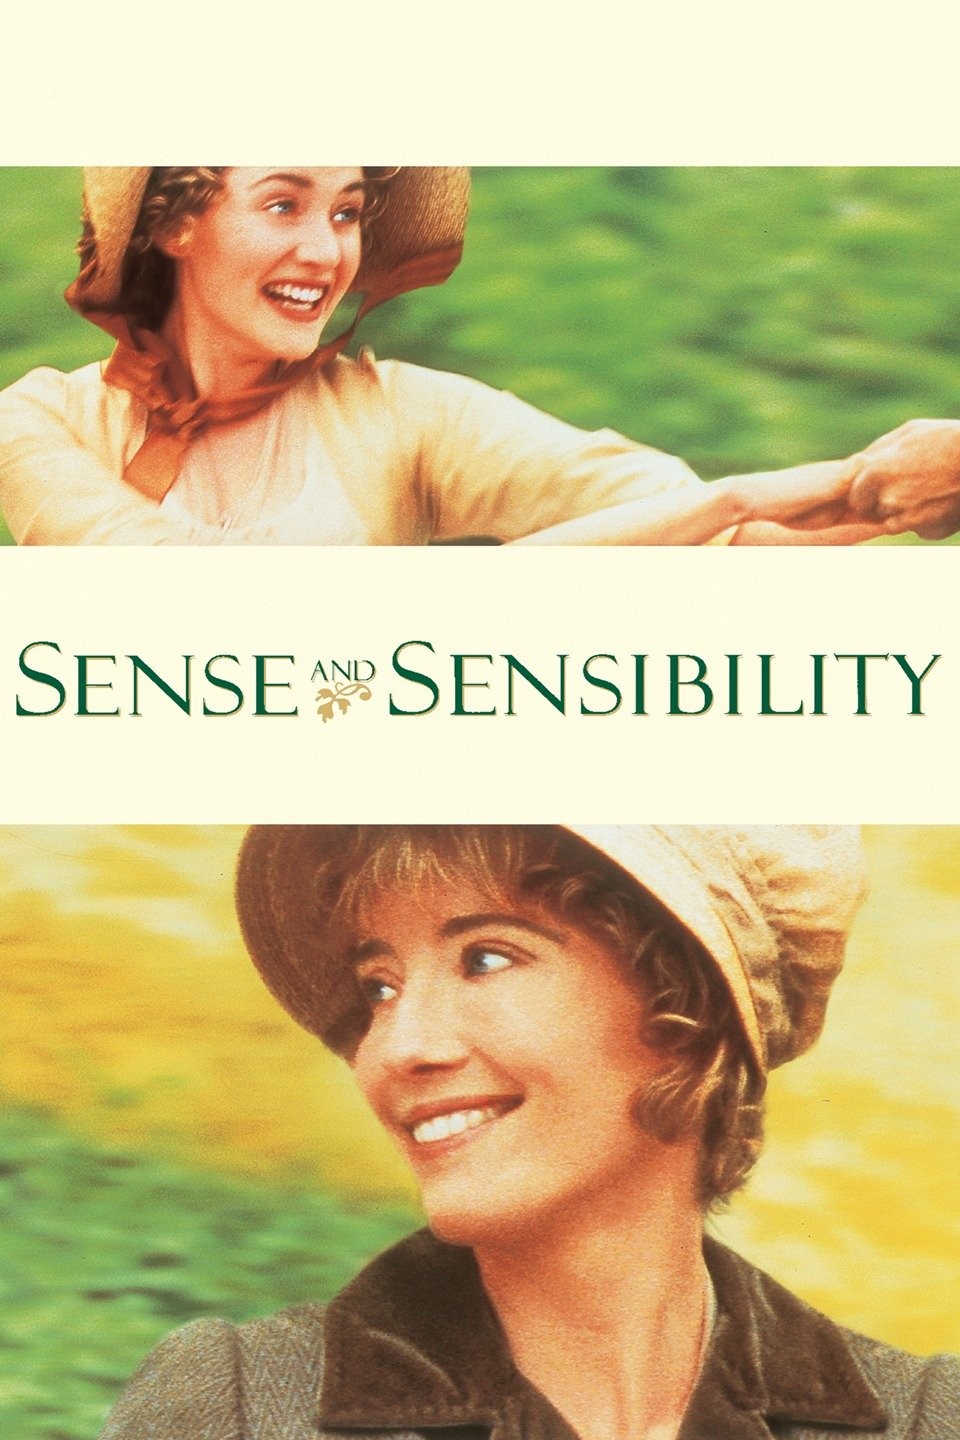 Sense and Sensibility | Rotten Tomatoes